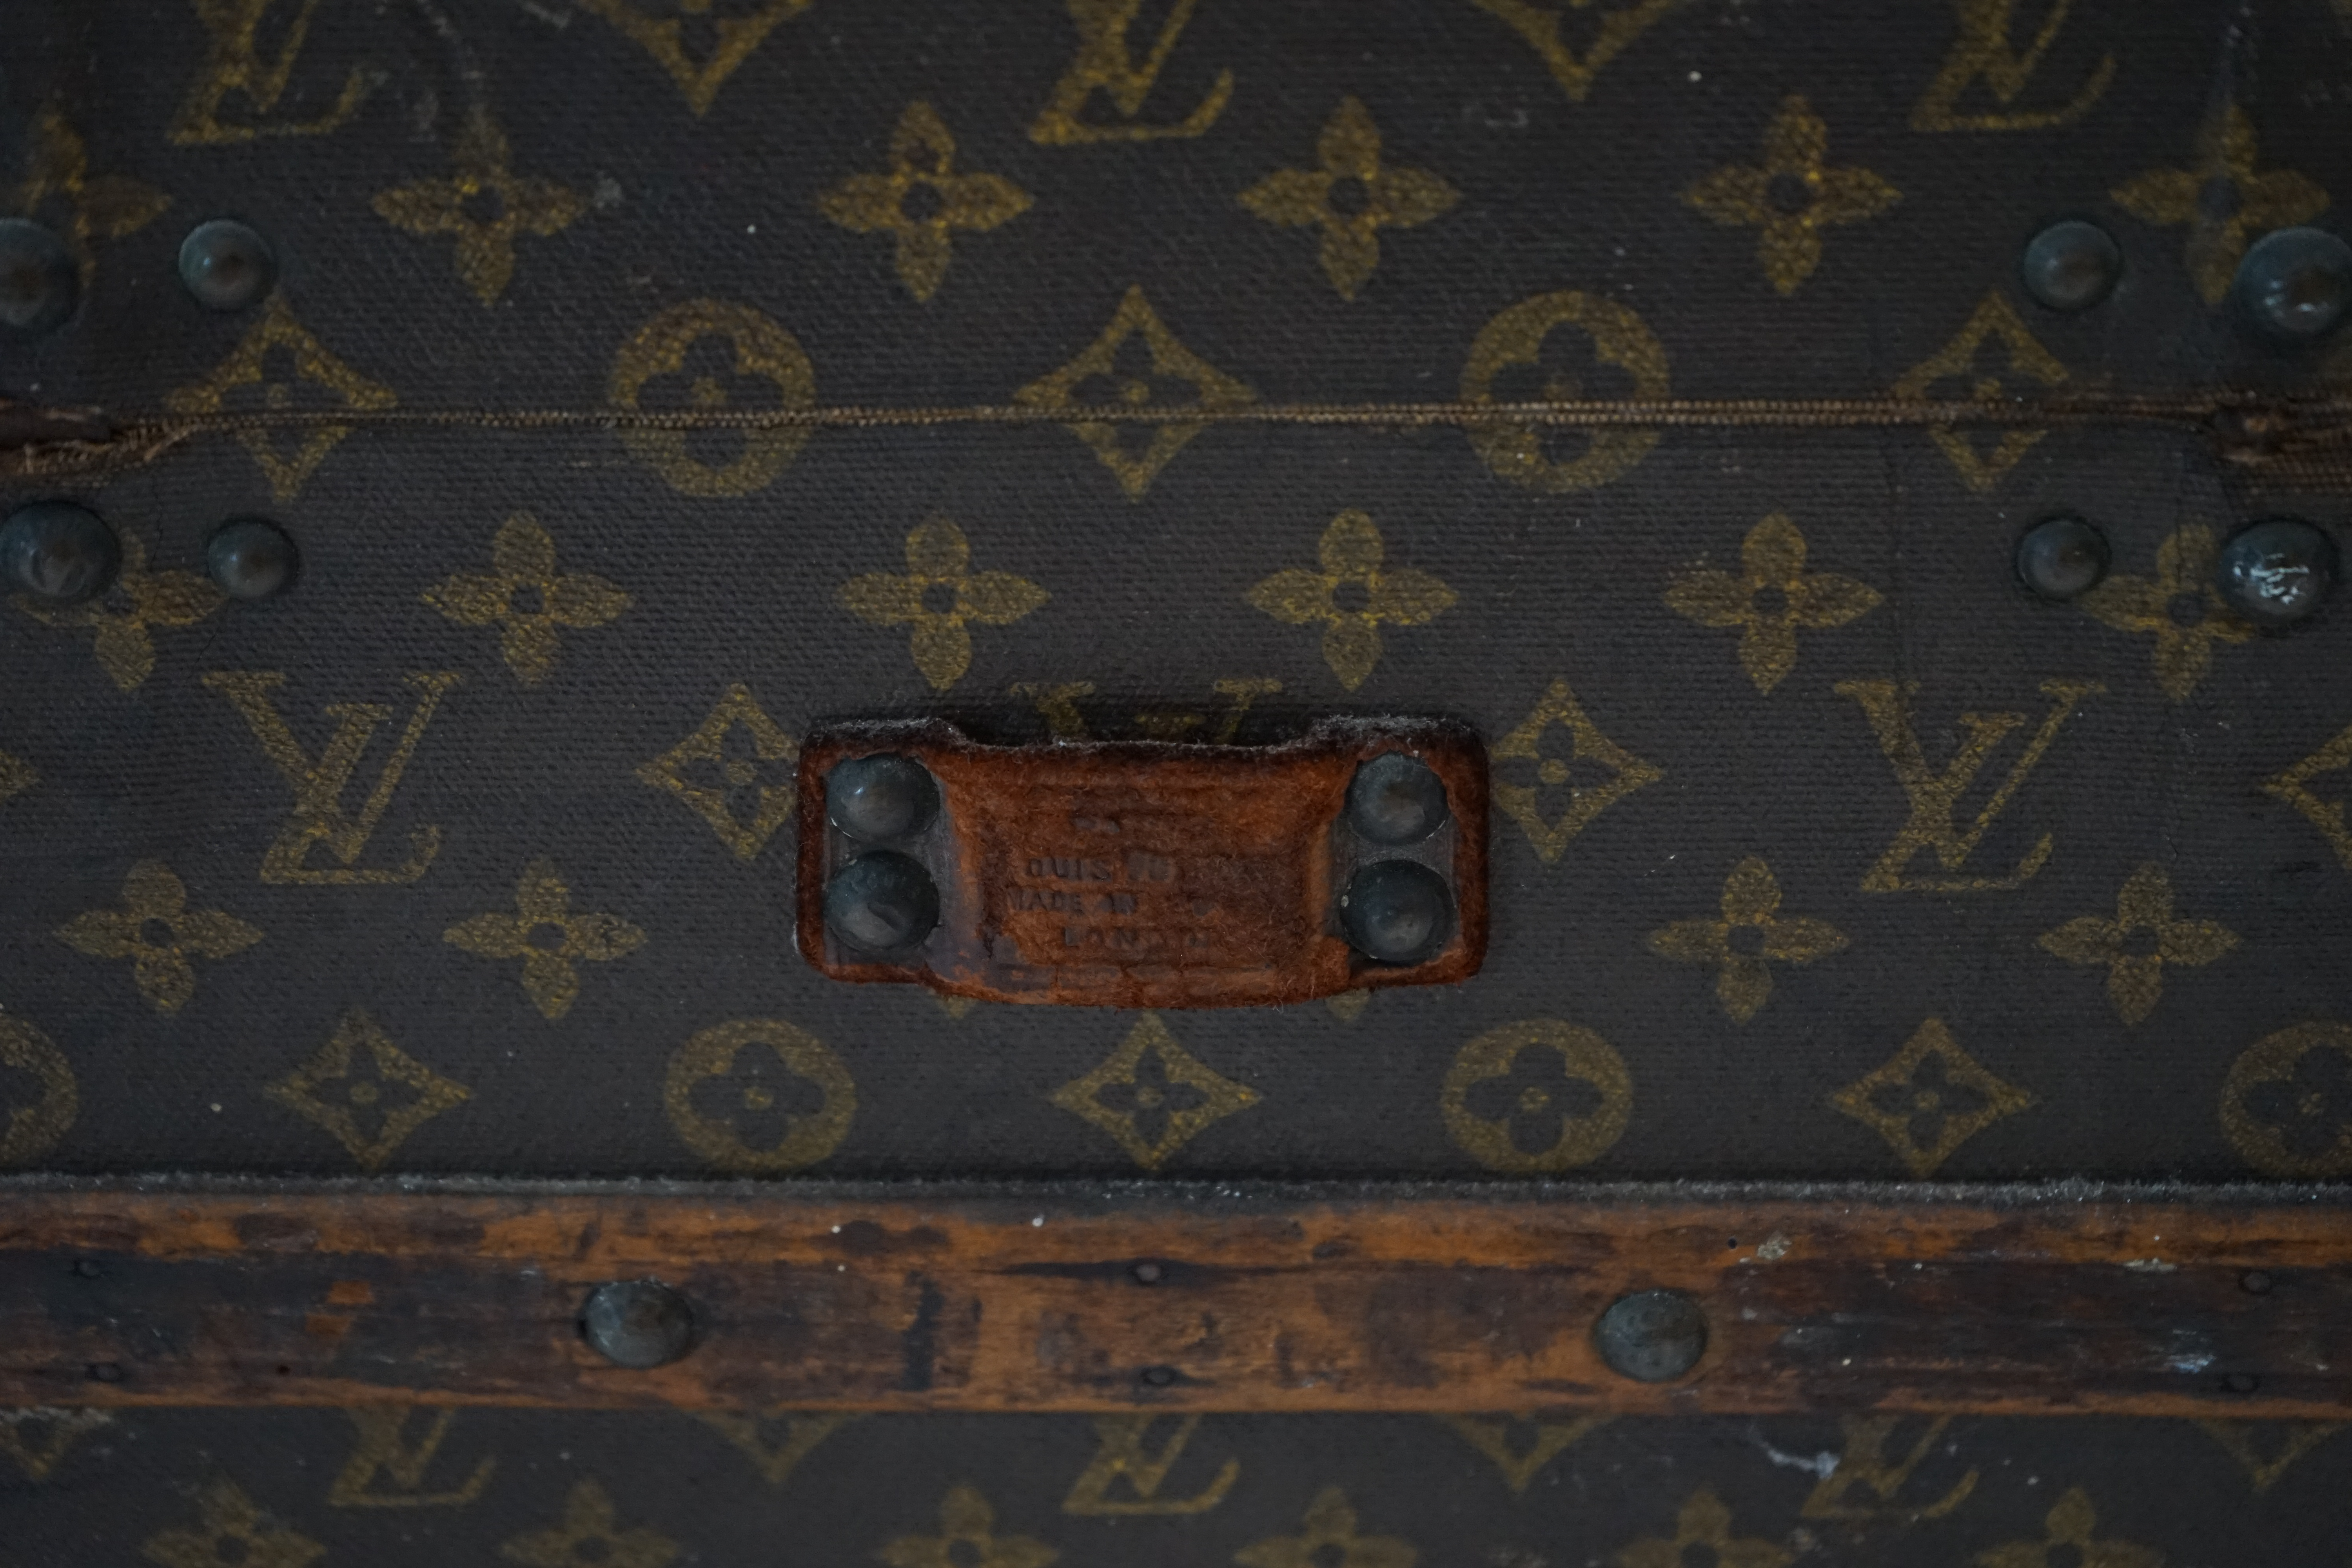 A vintage Louis Vuitton rectangular trunk, width 92cm, depth 52cm, height 34cm